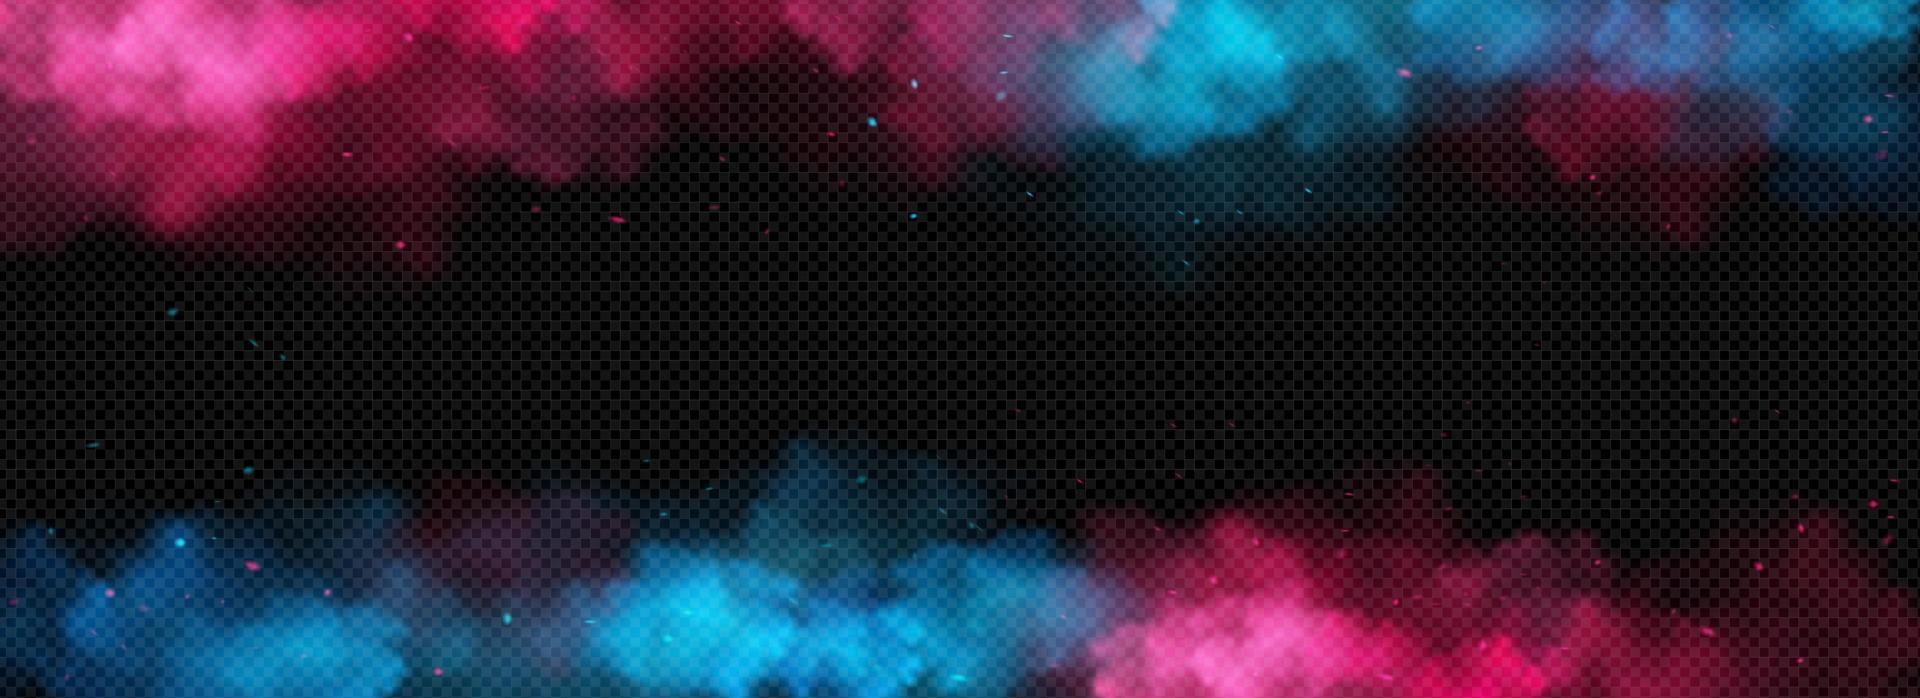 Blue and pink smoke frame dark background vector